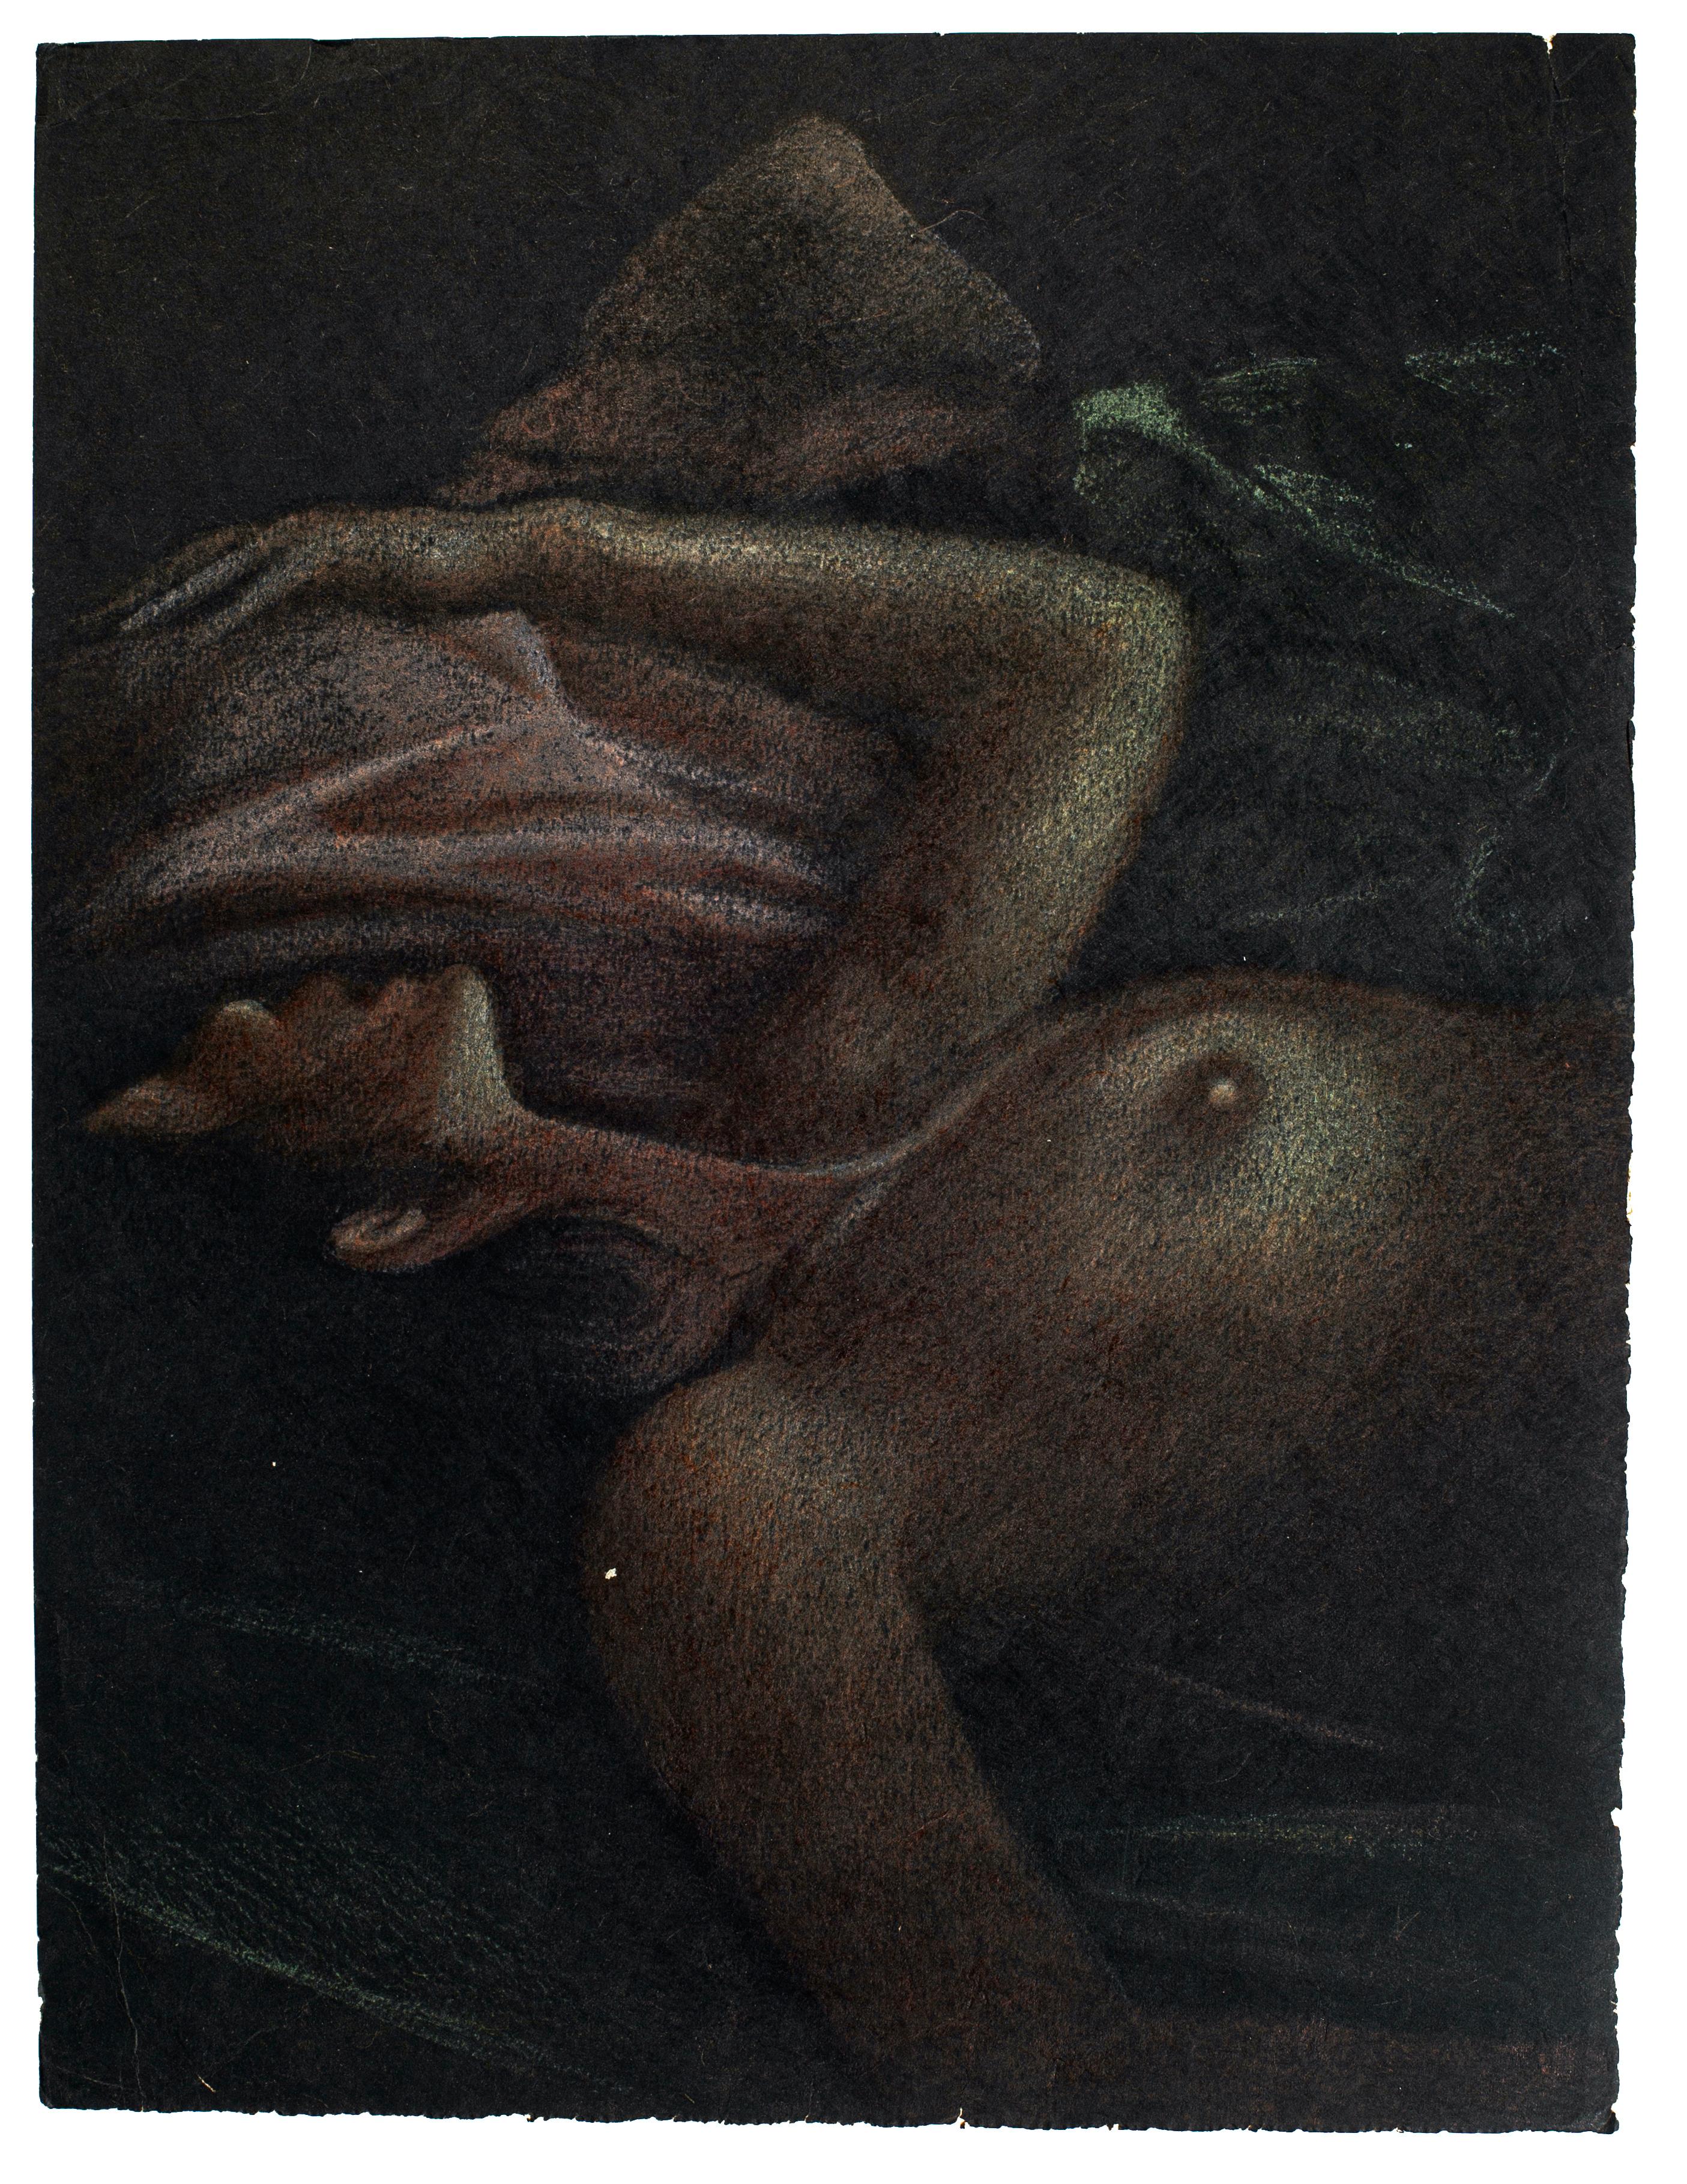 Bernadette Kelly Nude Print - Femme Nue Allongée - Original Lithograph by B. Kelly - 1980s